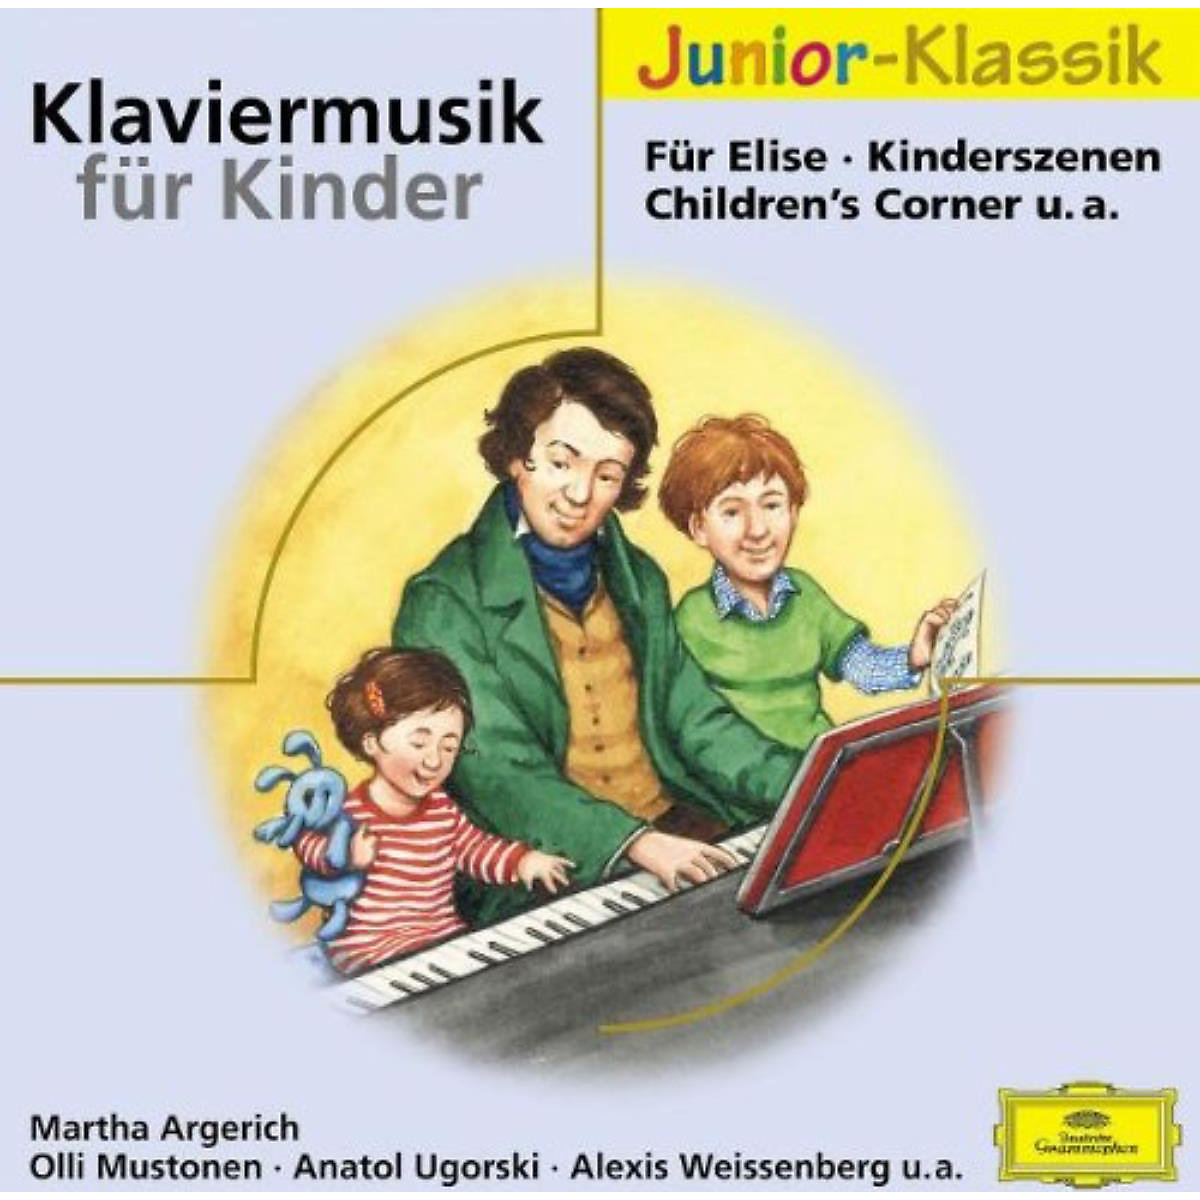 Universal CD Klaviermusik f. Kinder Vol. 1 Für Elise (Junior-Klassik)